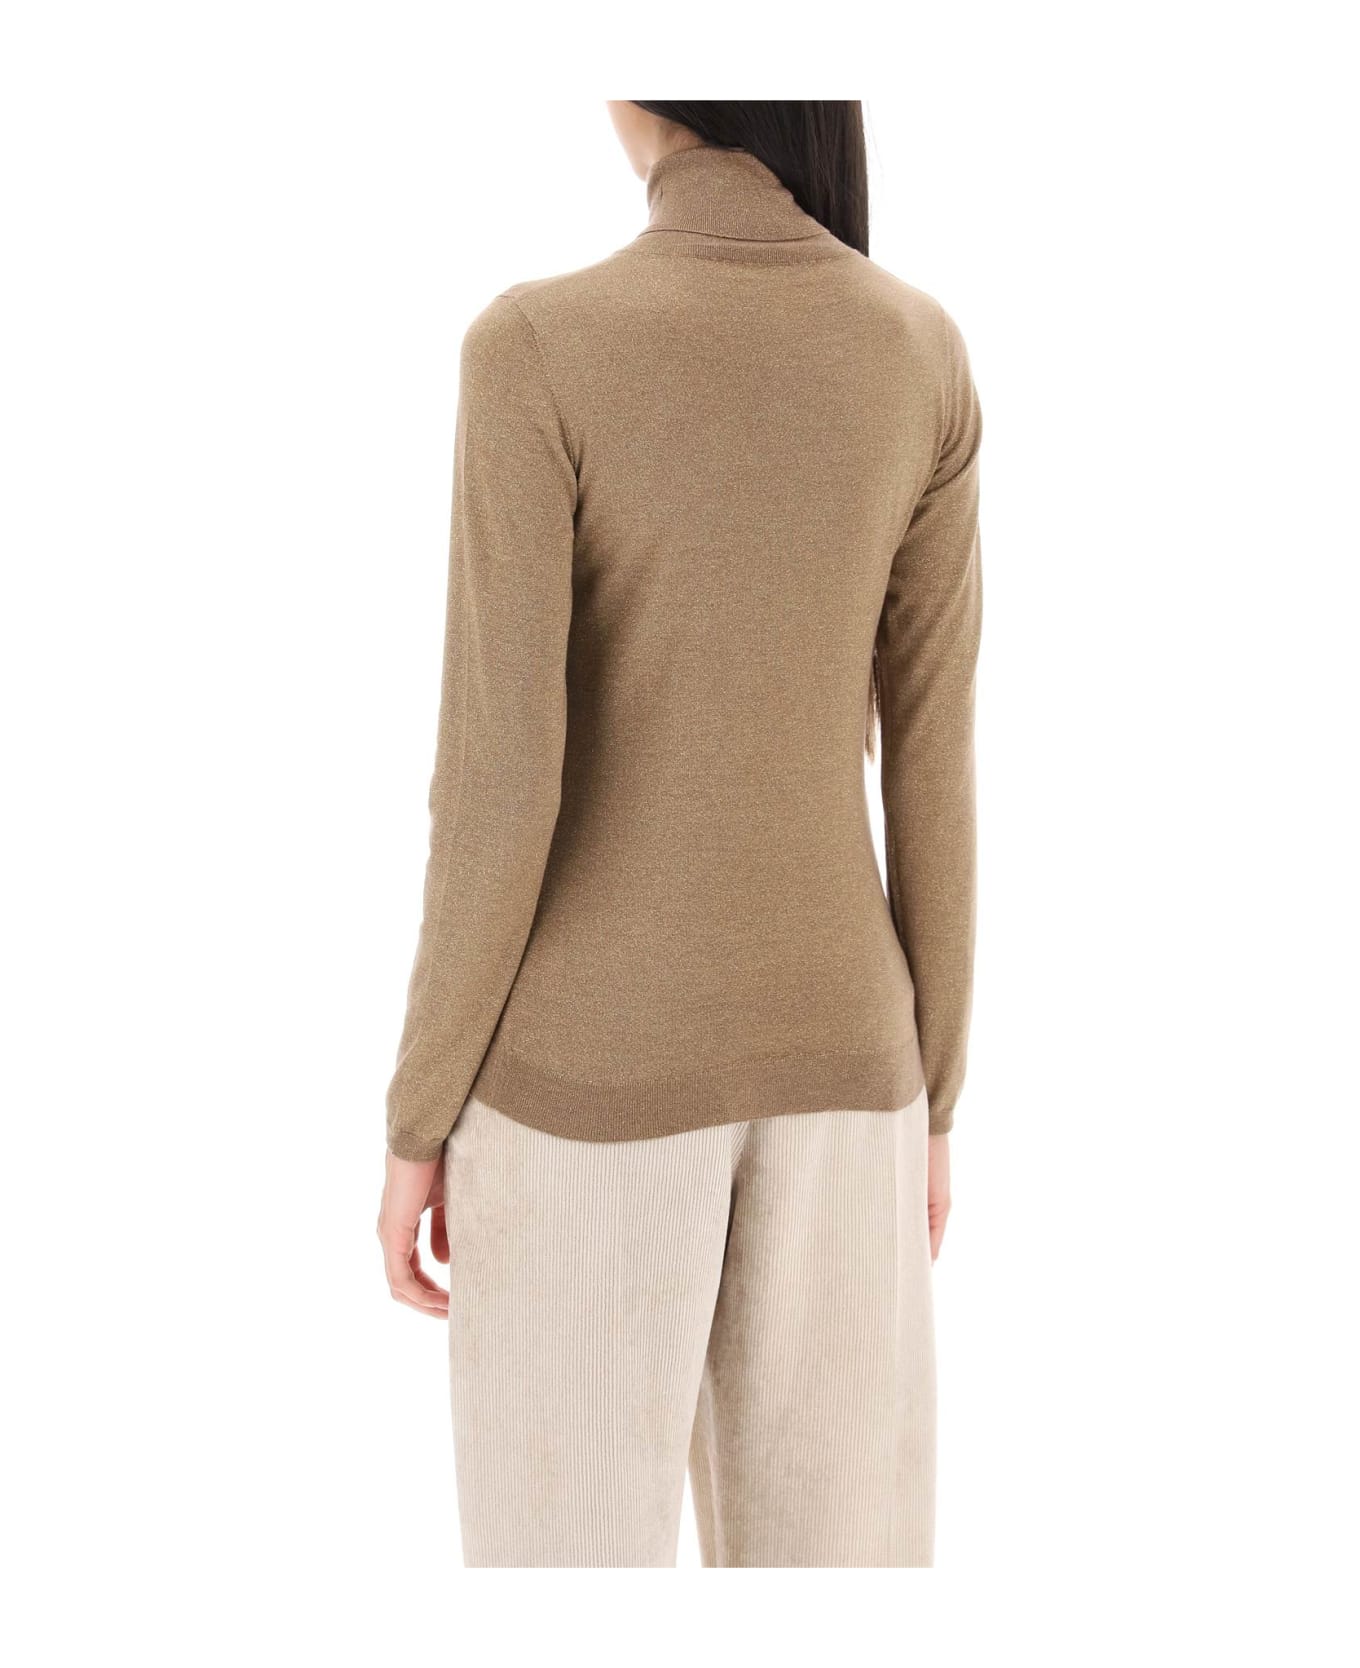 Brunello Cucinelli Turtleneck Sweater In Cashmere And Silk Lurex Knit - TABACCO (Beige)